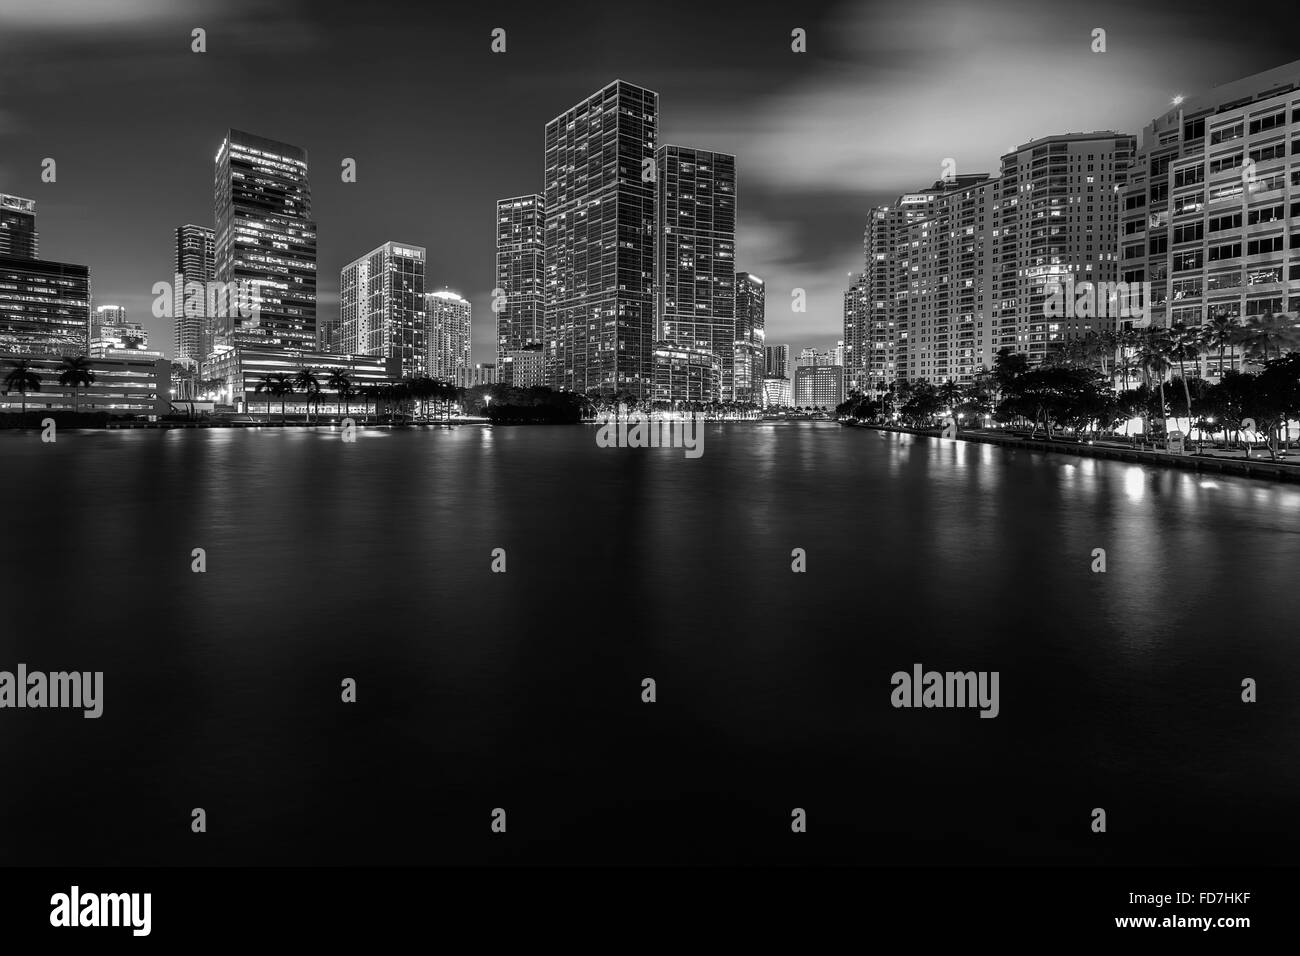 Miami Skyline - Brickell Financial District Stock Photo